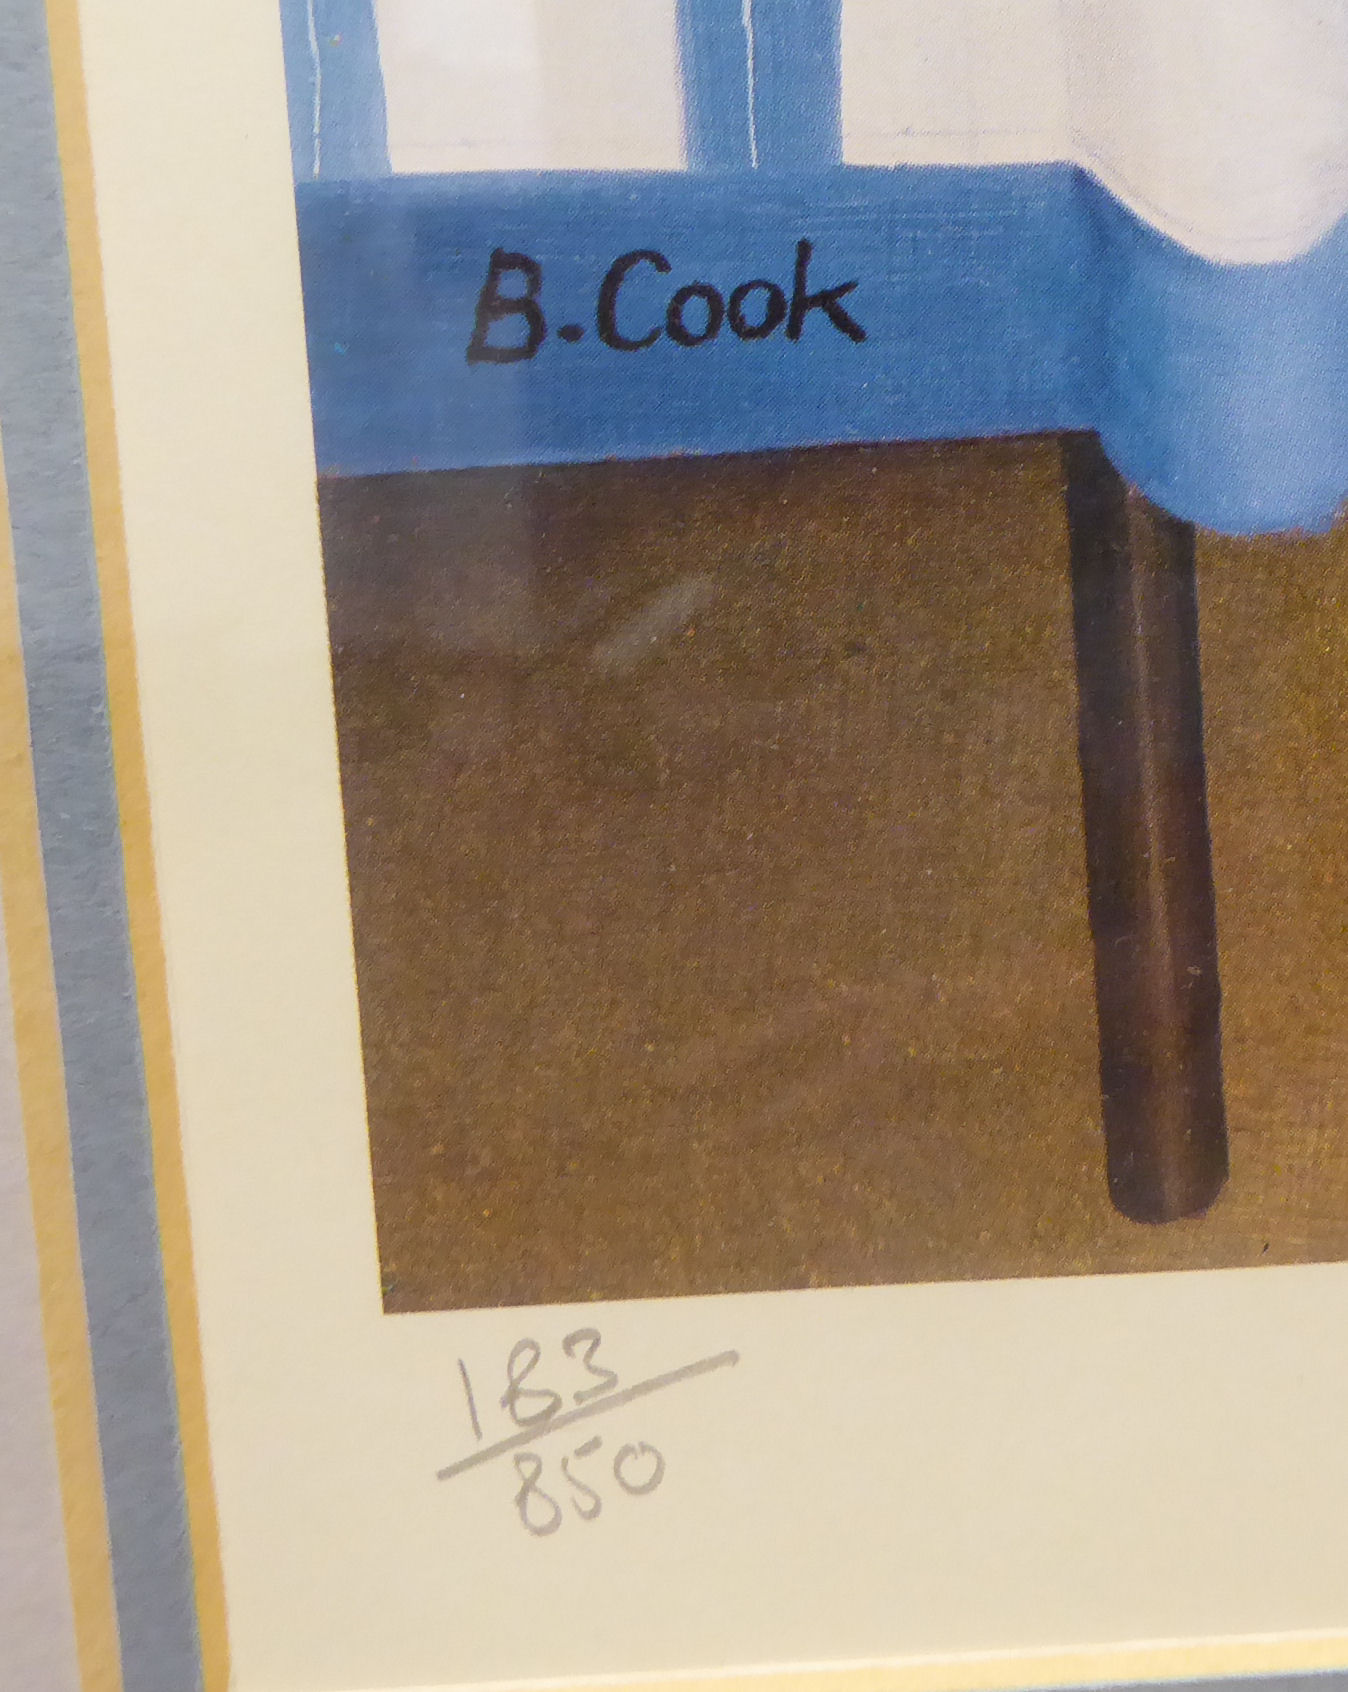 Beryl Cook - 'Elviras Cafe' Limited Edition 183/850 coloured print bears a pencil signature, - Image 5 of 5